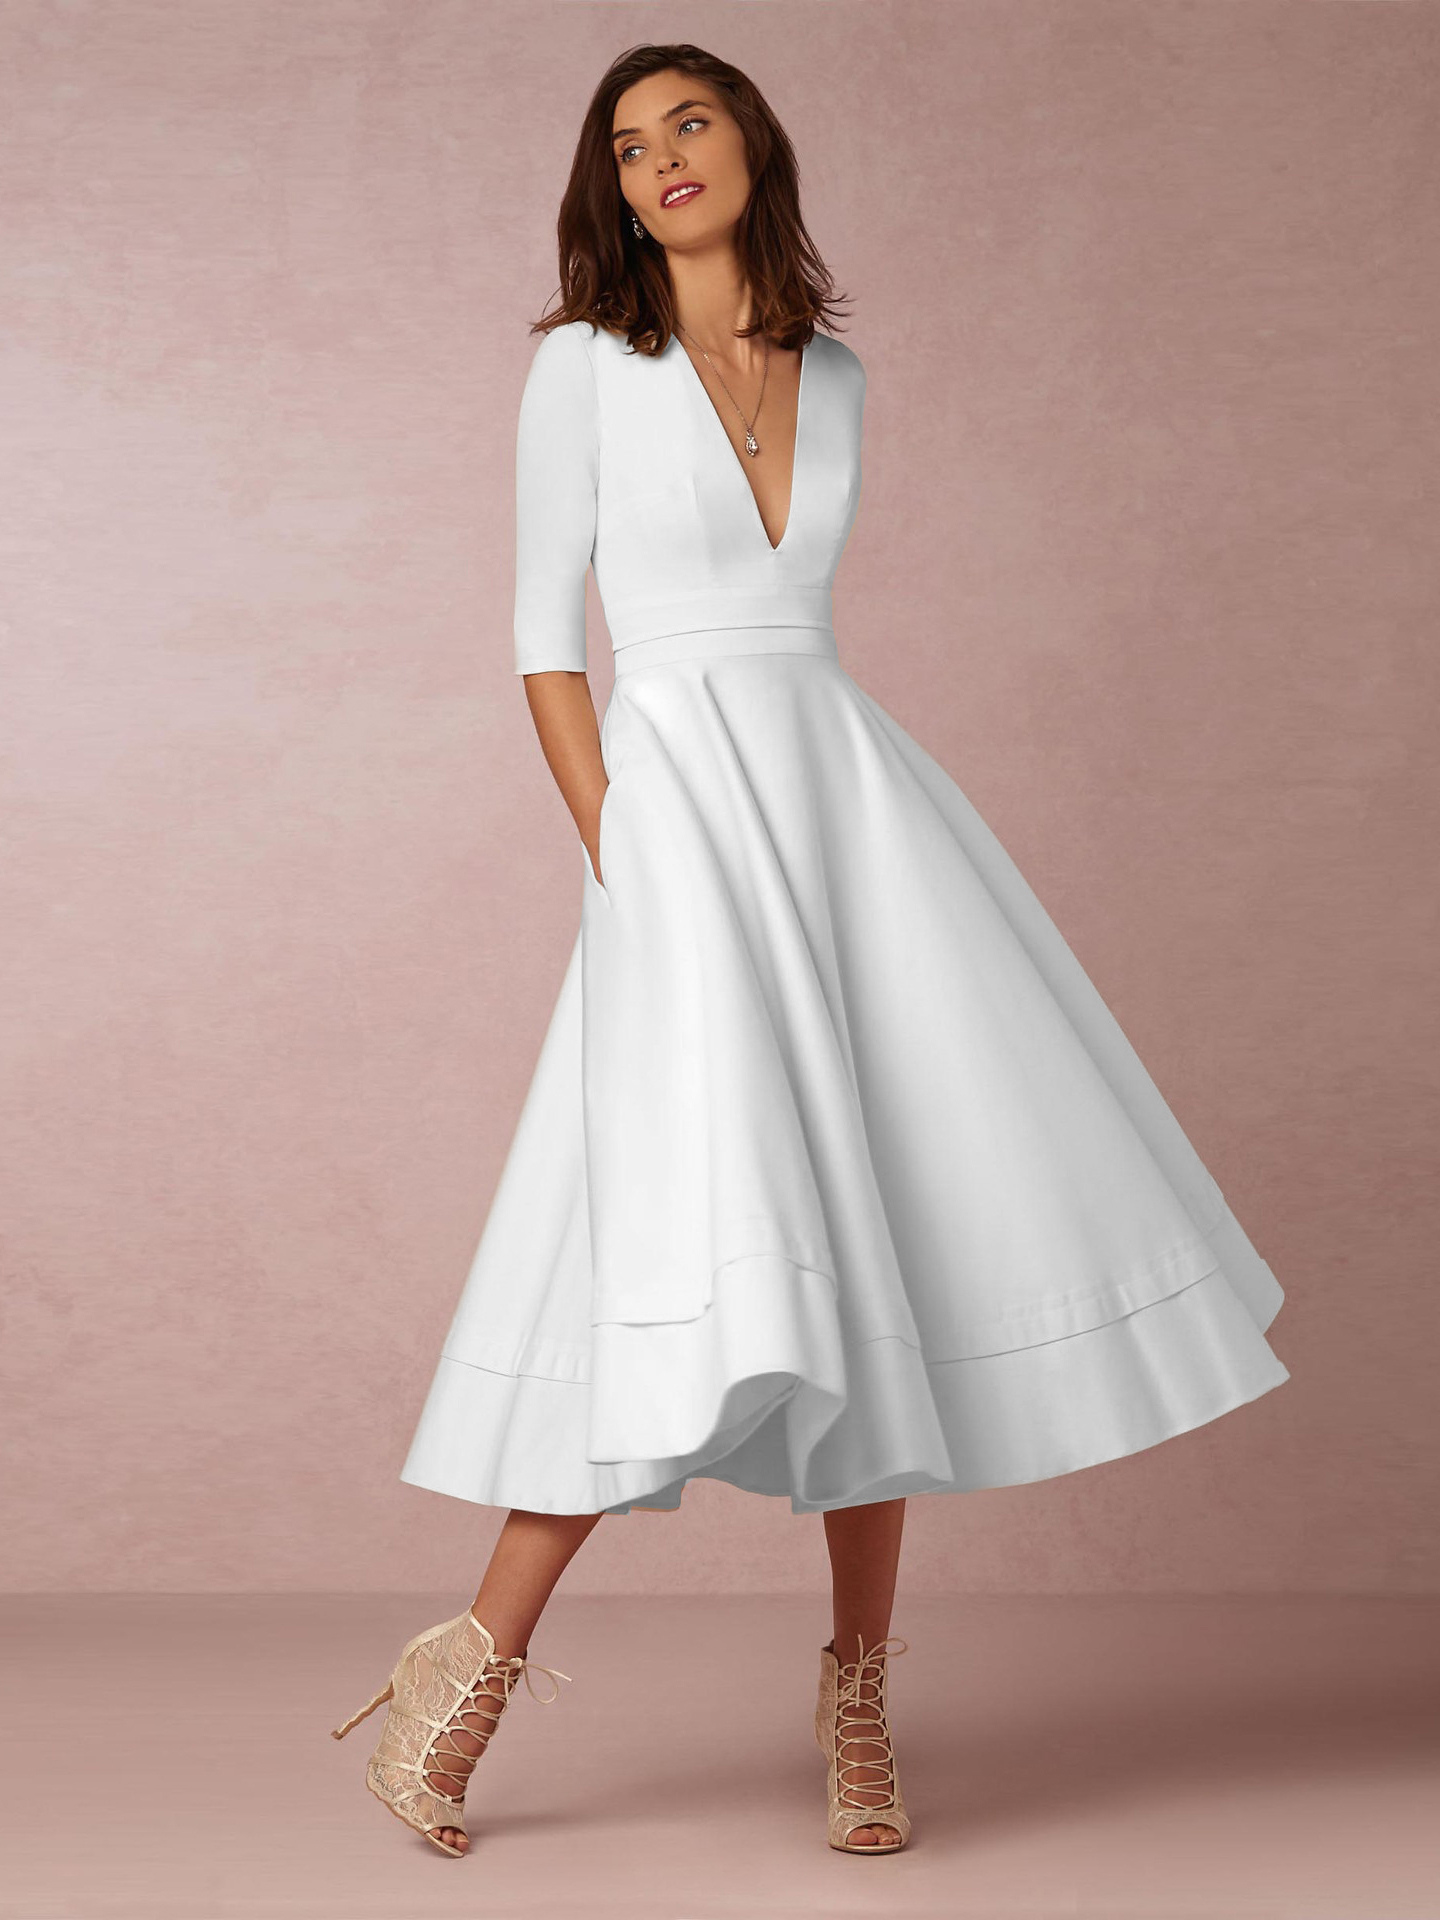 Plunge Midi Dress Half Sleeves Pockets A-Line Prom Dresses